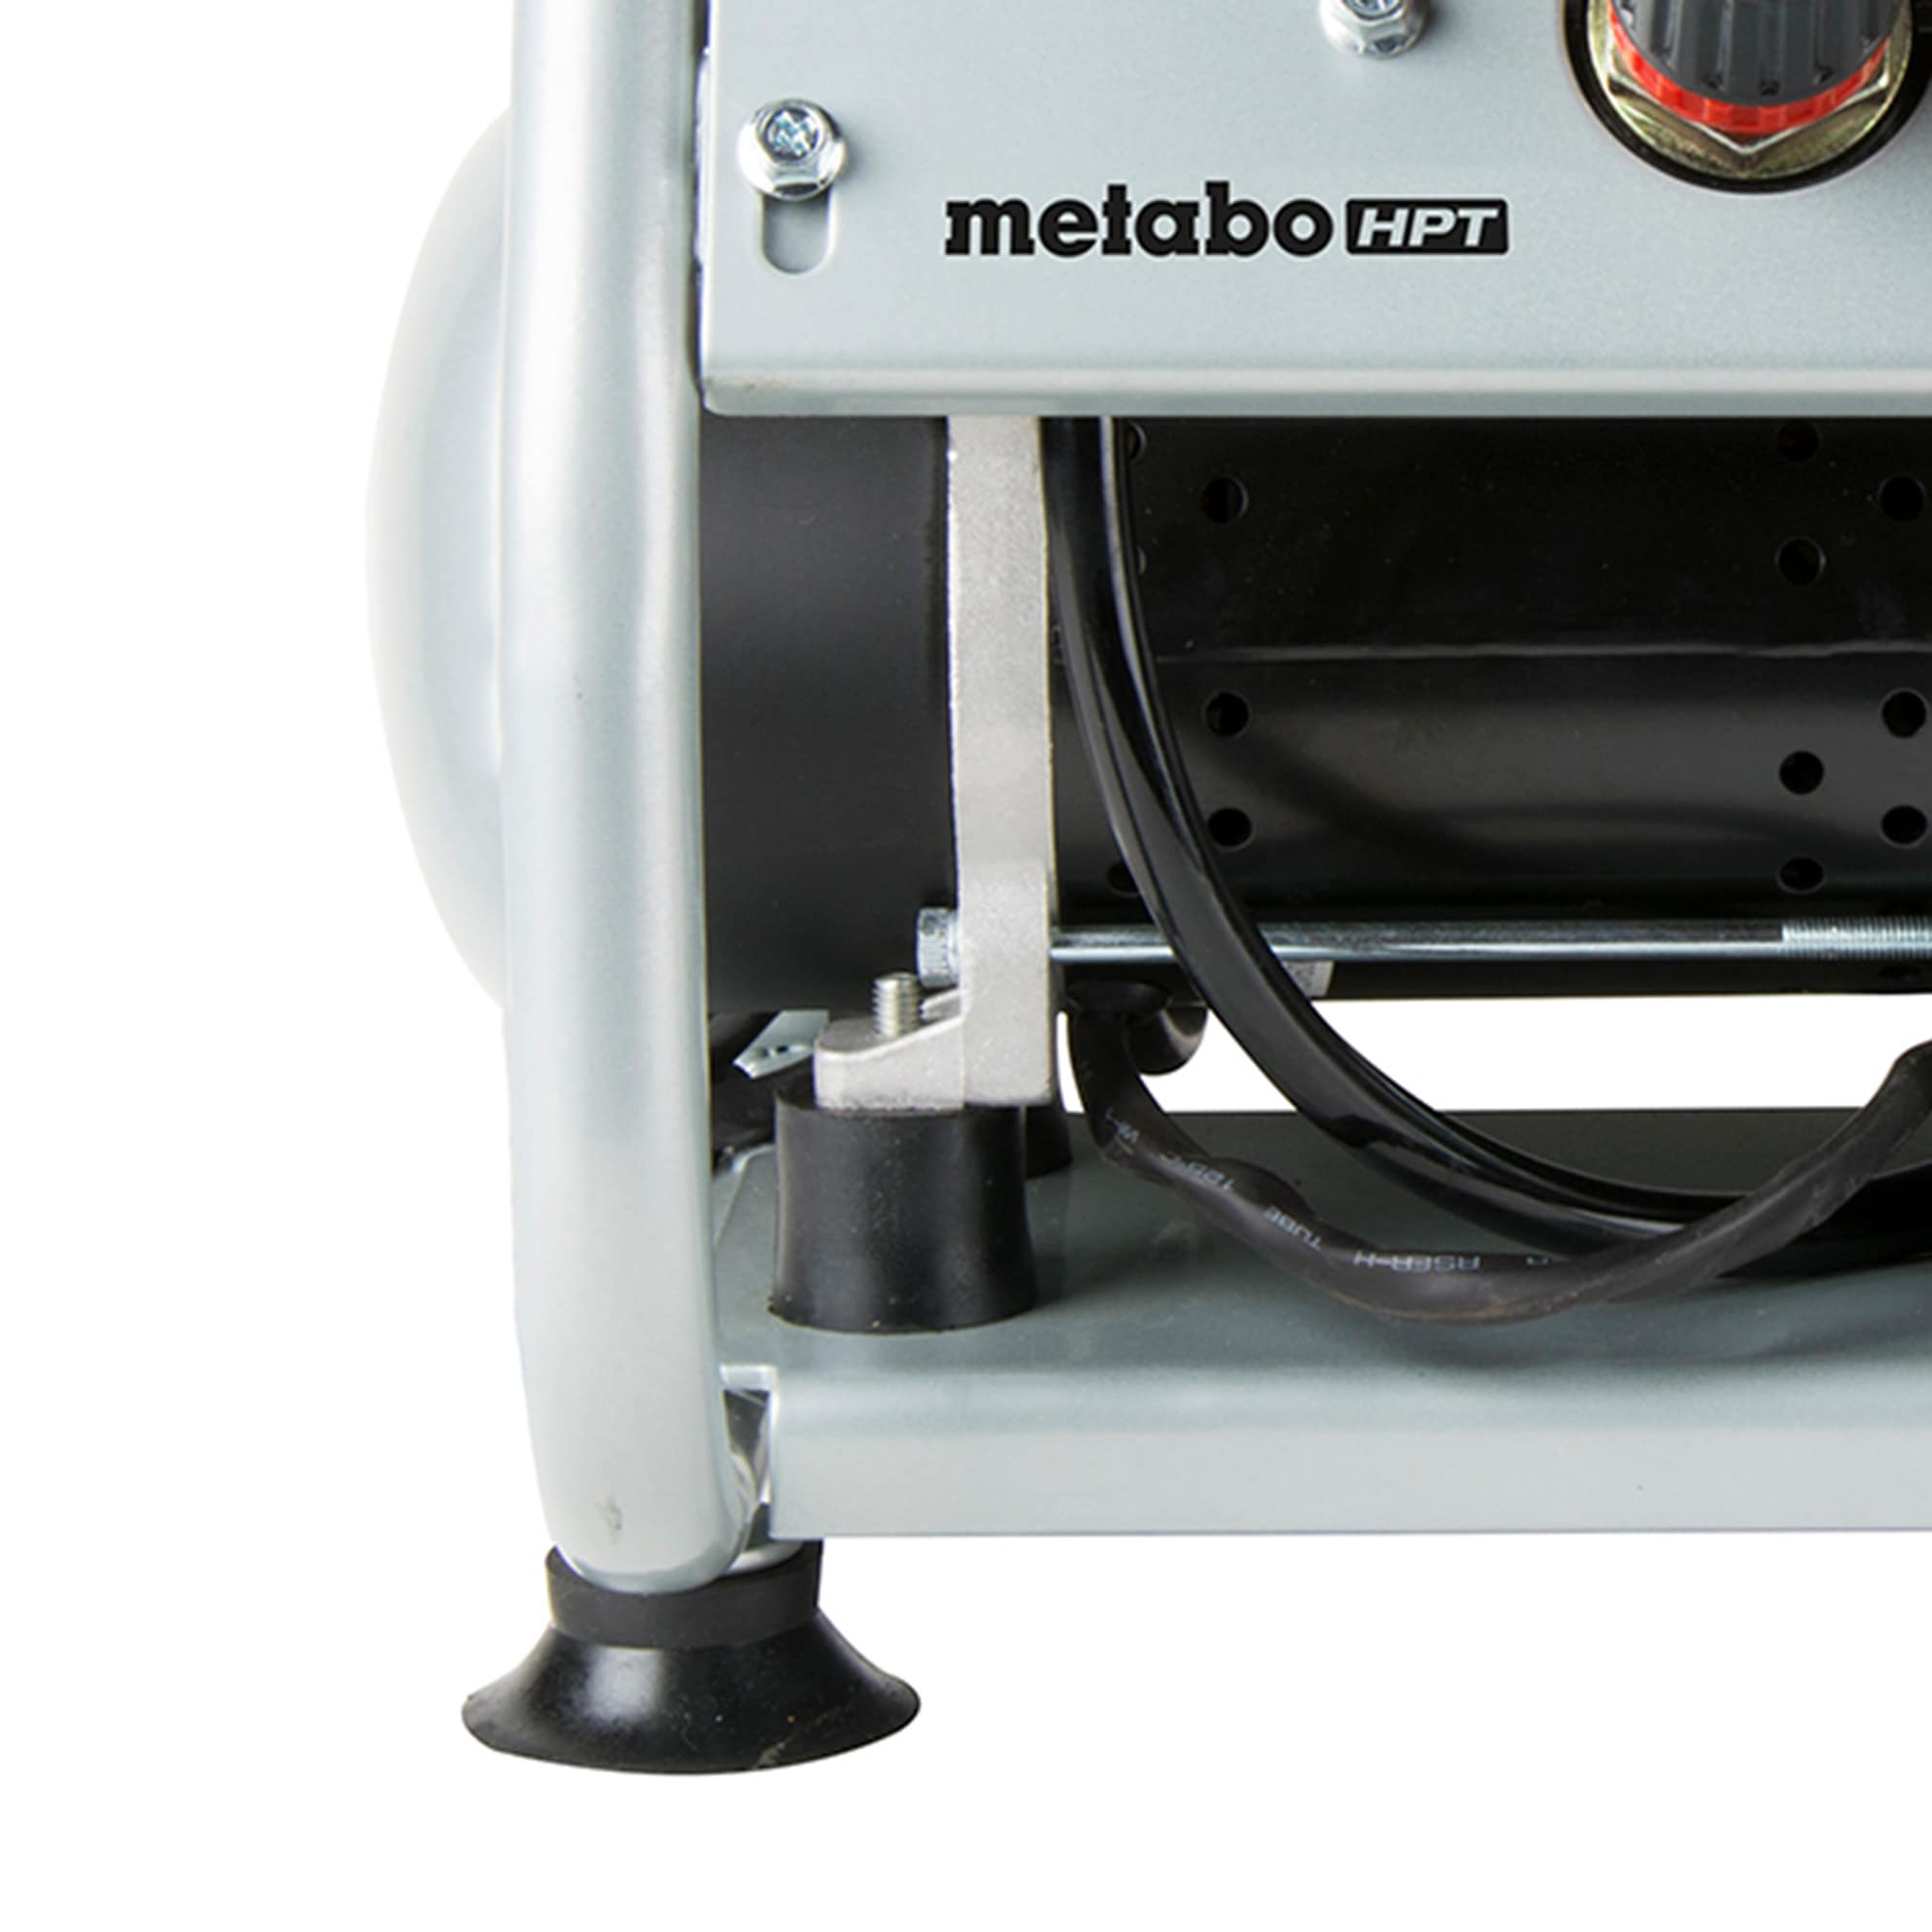 Metabo HPT 1-Gallon Portable 125 PSI Horizontal Quiet Air